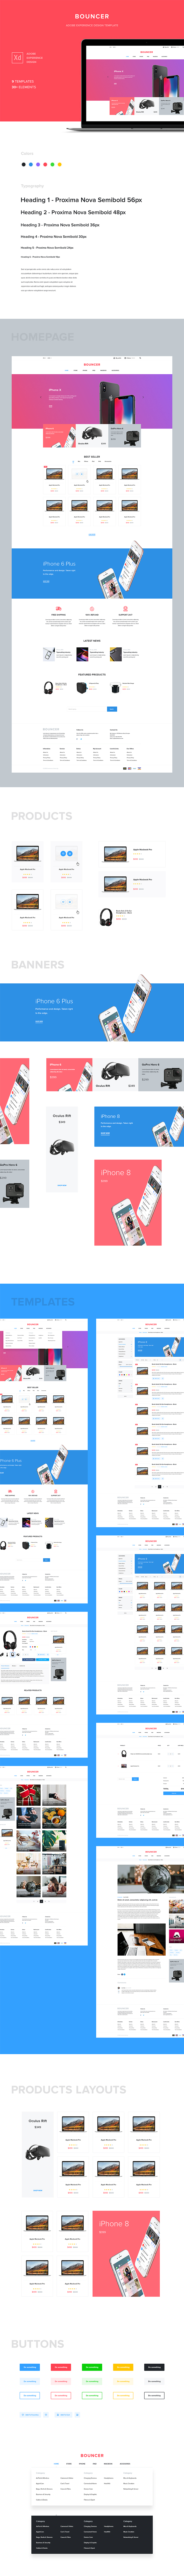 Freebie : Creative Ecommerce UI Kit For Designers (Adobe XD)